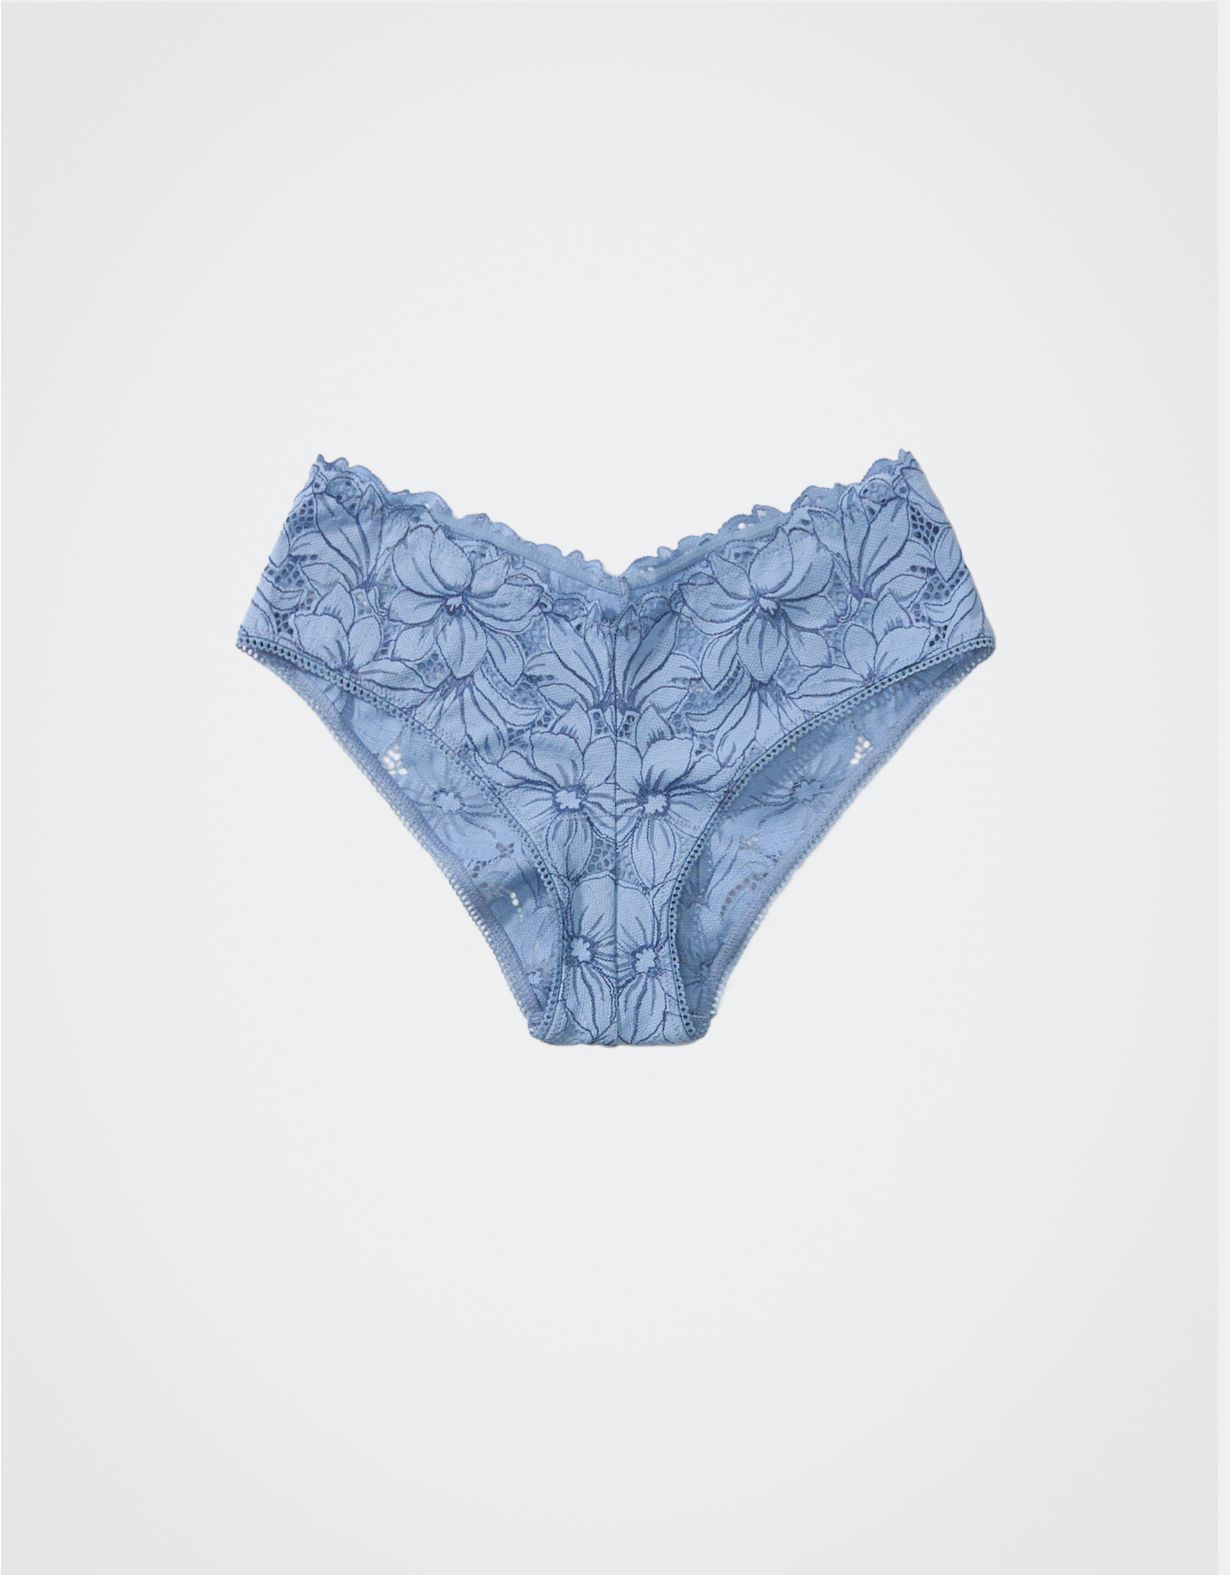 Aerie Crochet Lace Cheeky Underwear